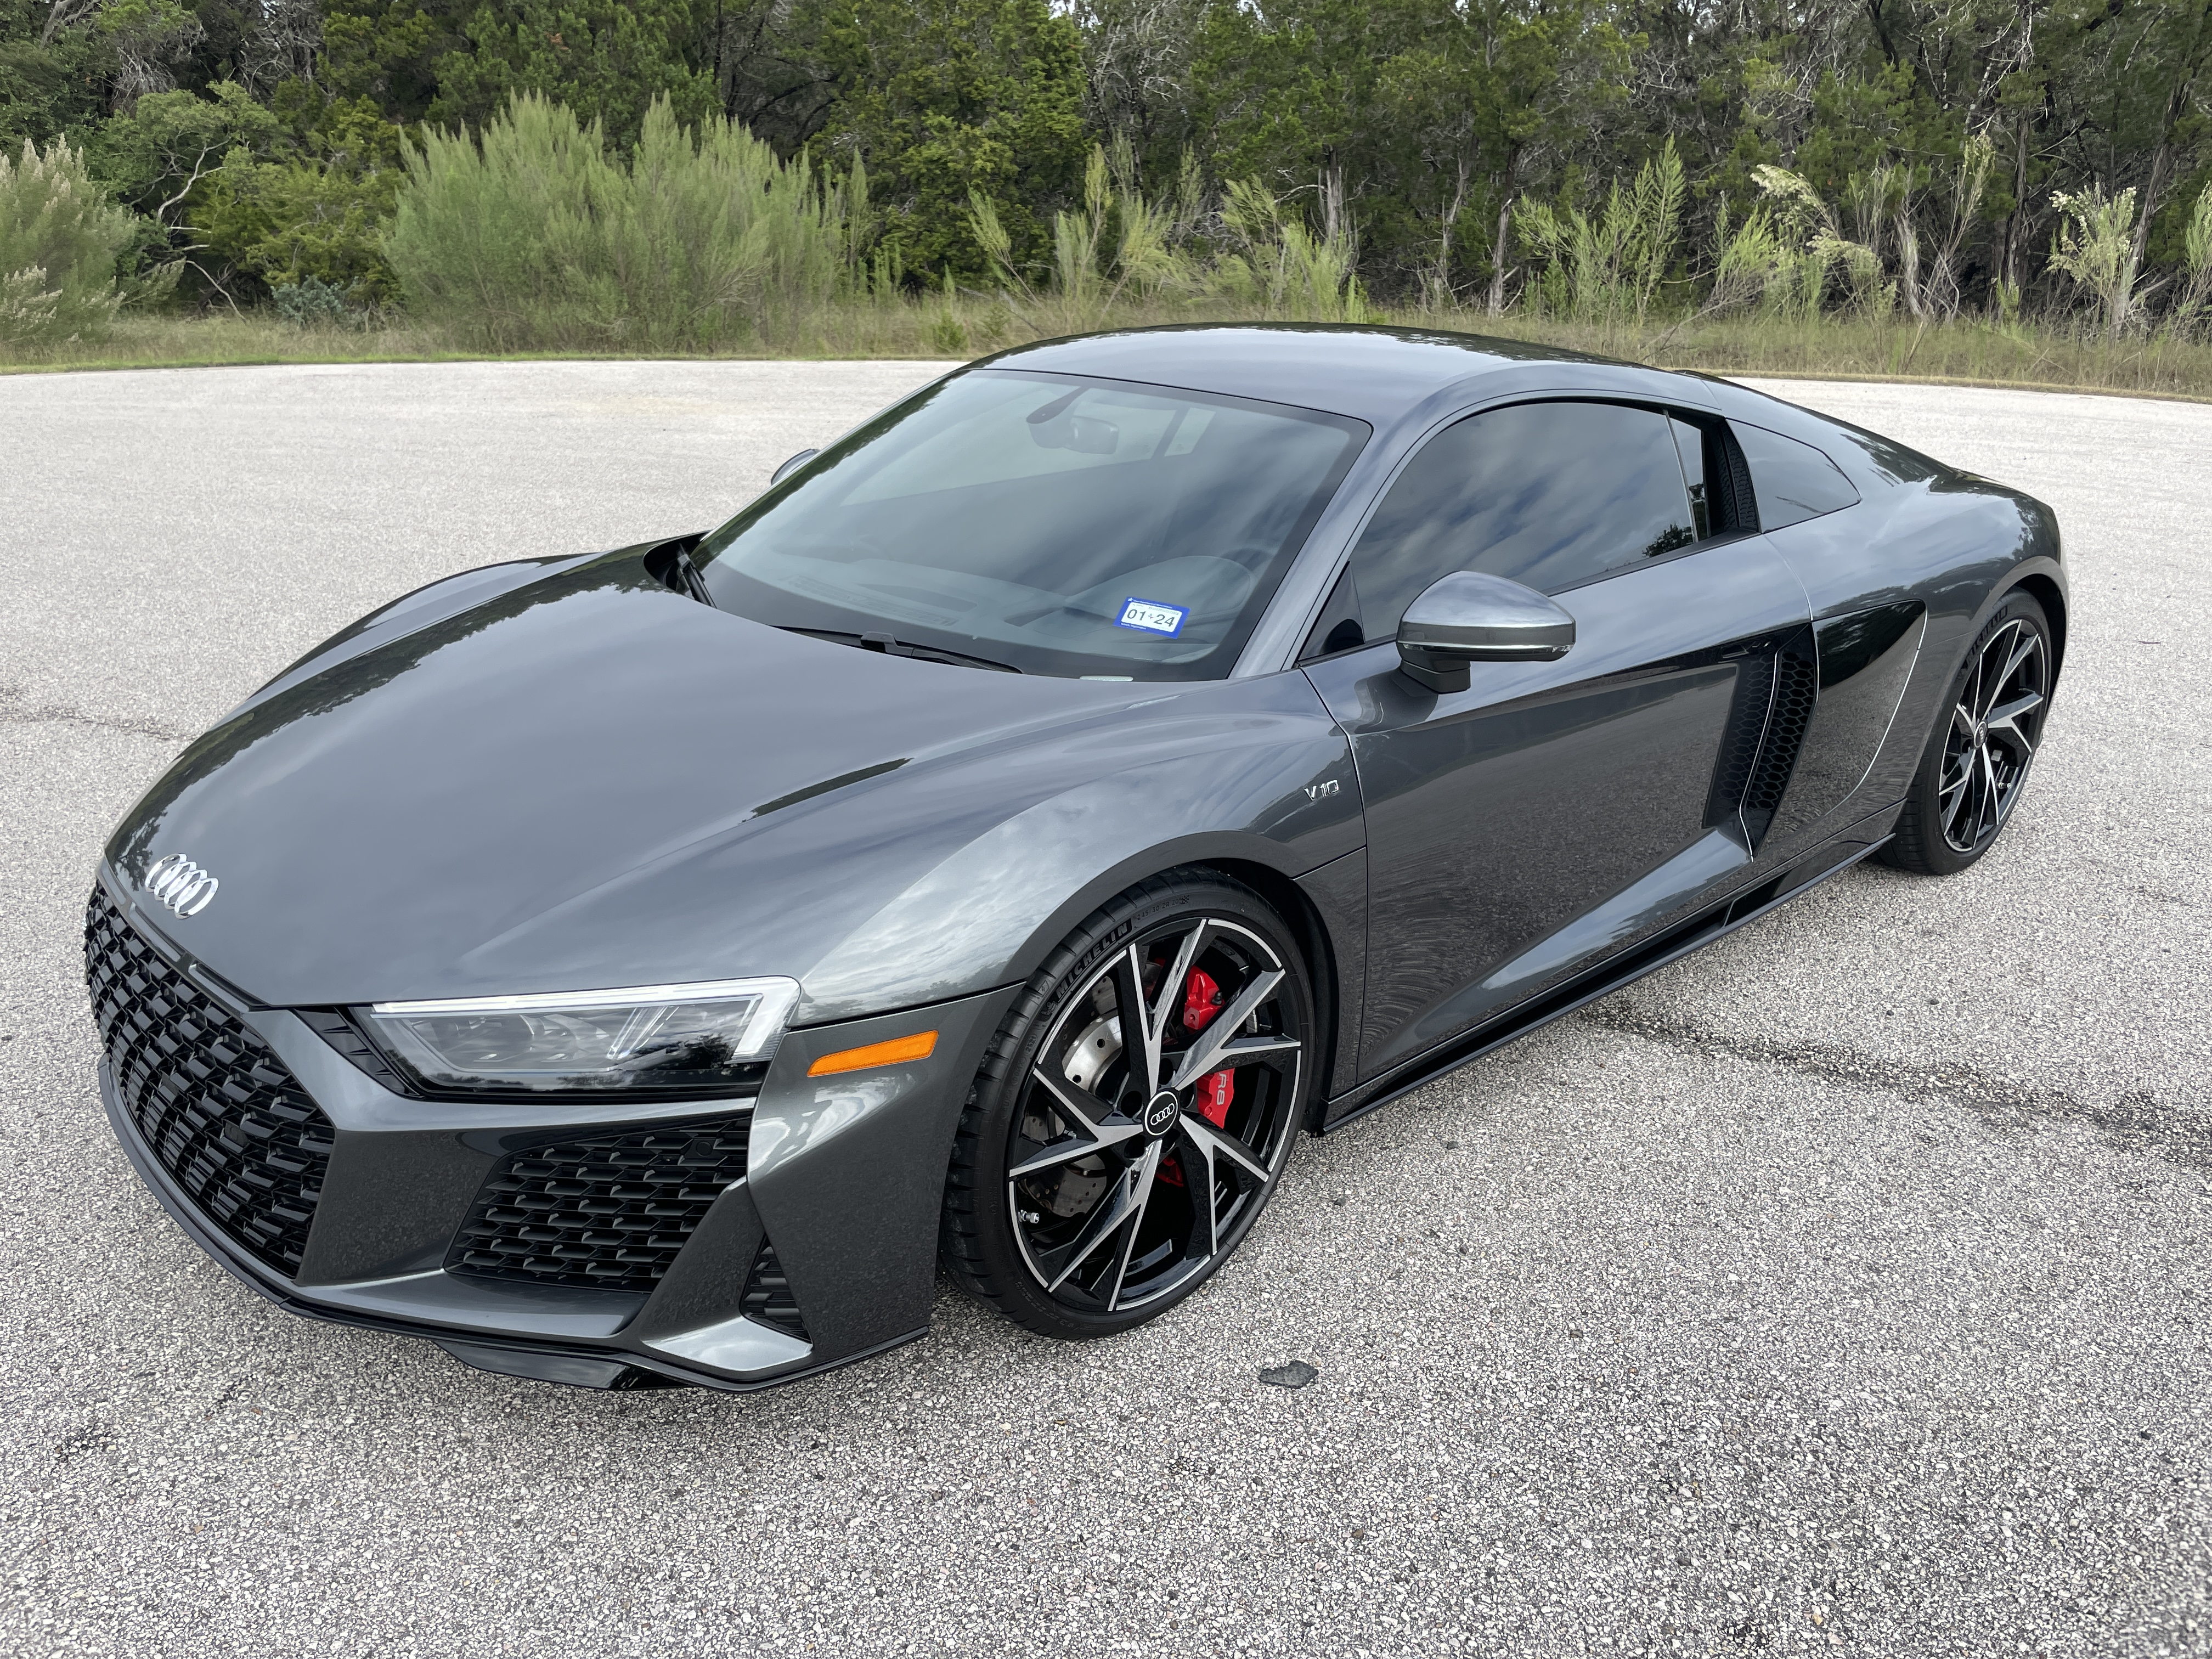 Audi Sport Models For Sale in Austin, TX